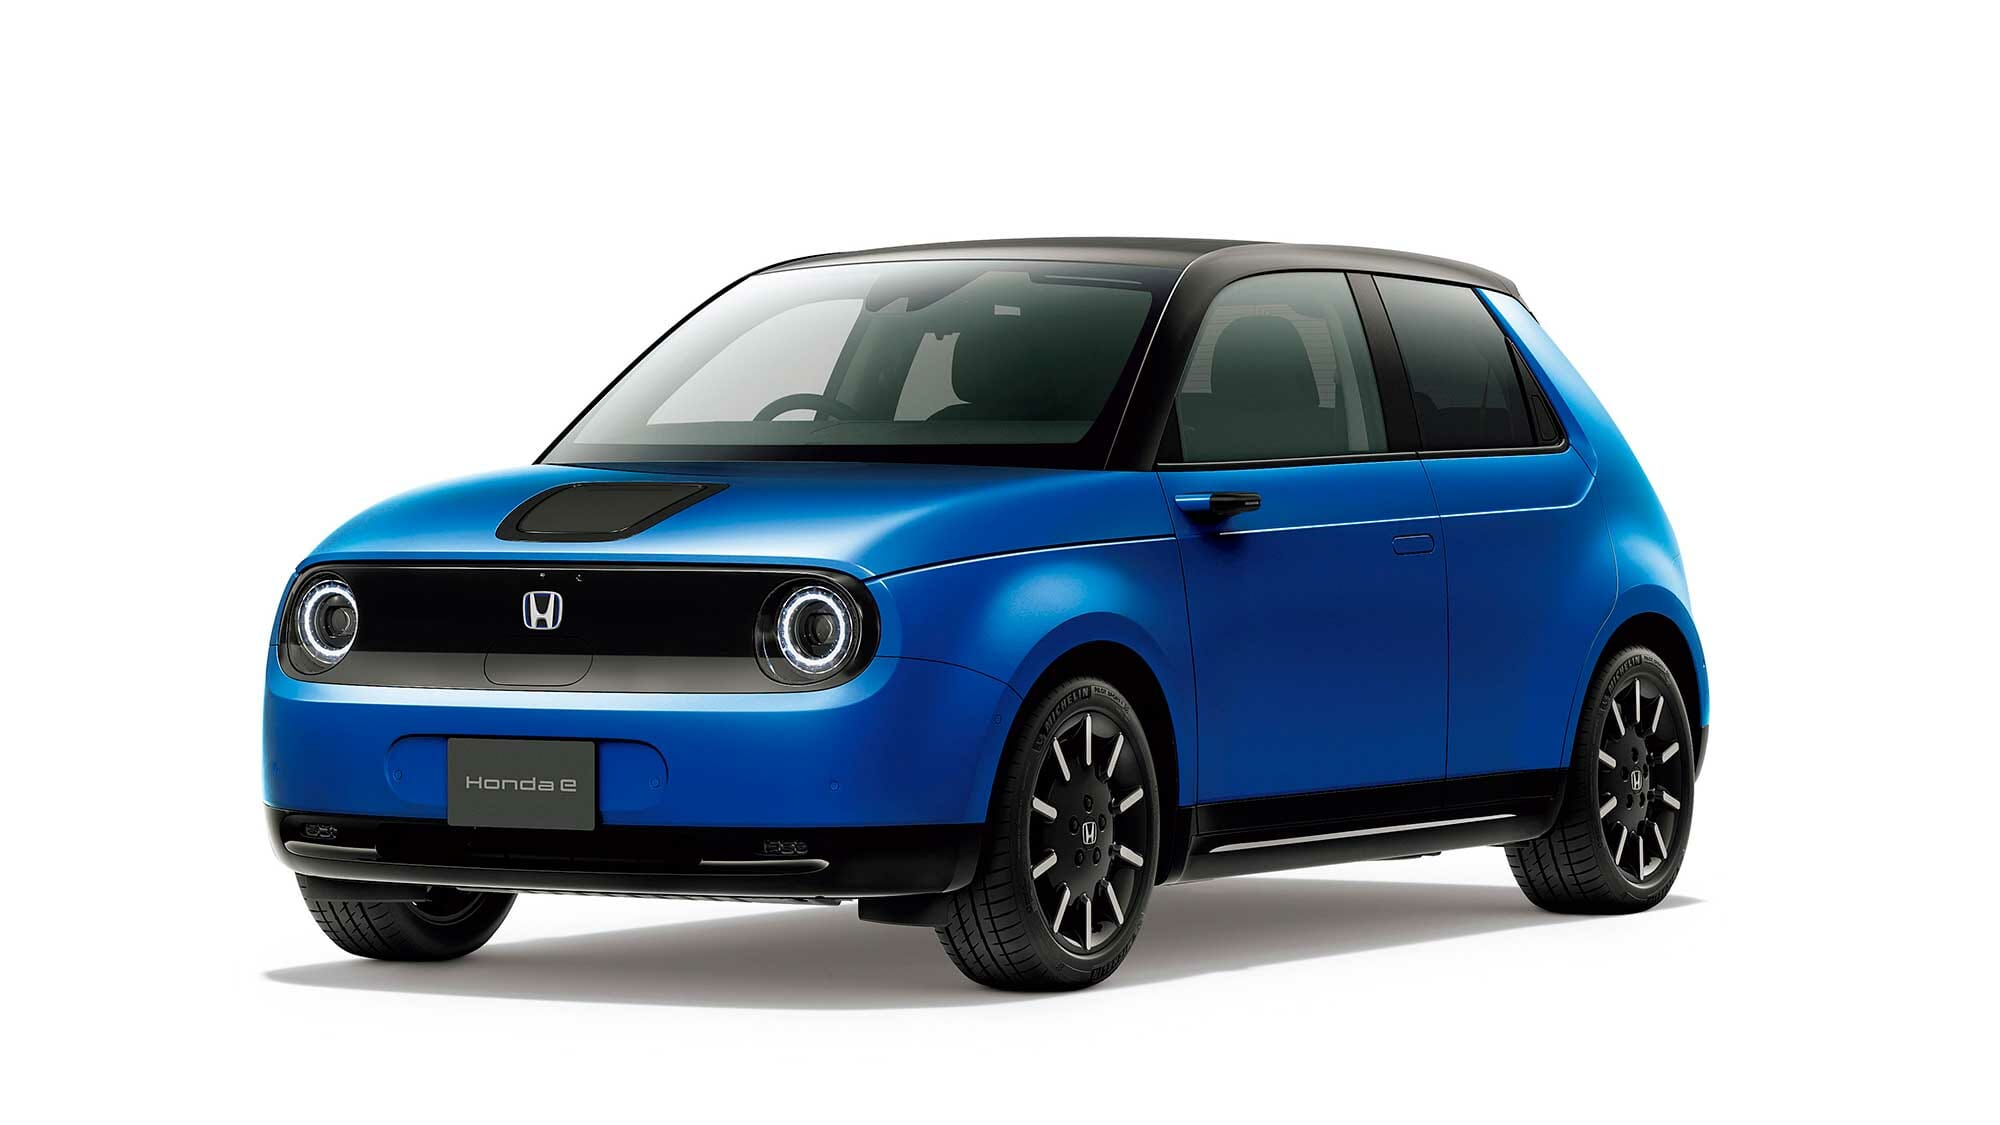 Honda E ホンダ E 日本発売 国内販売計画台数は年間1000台だけ Evsmartブログ